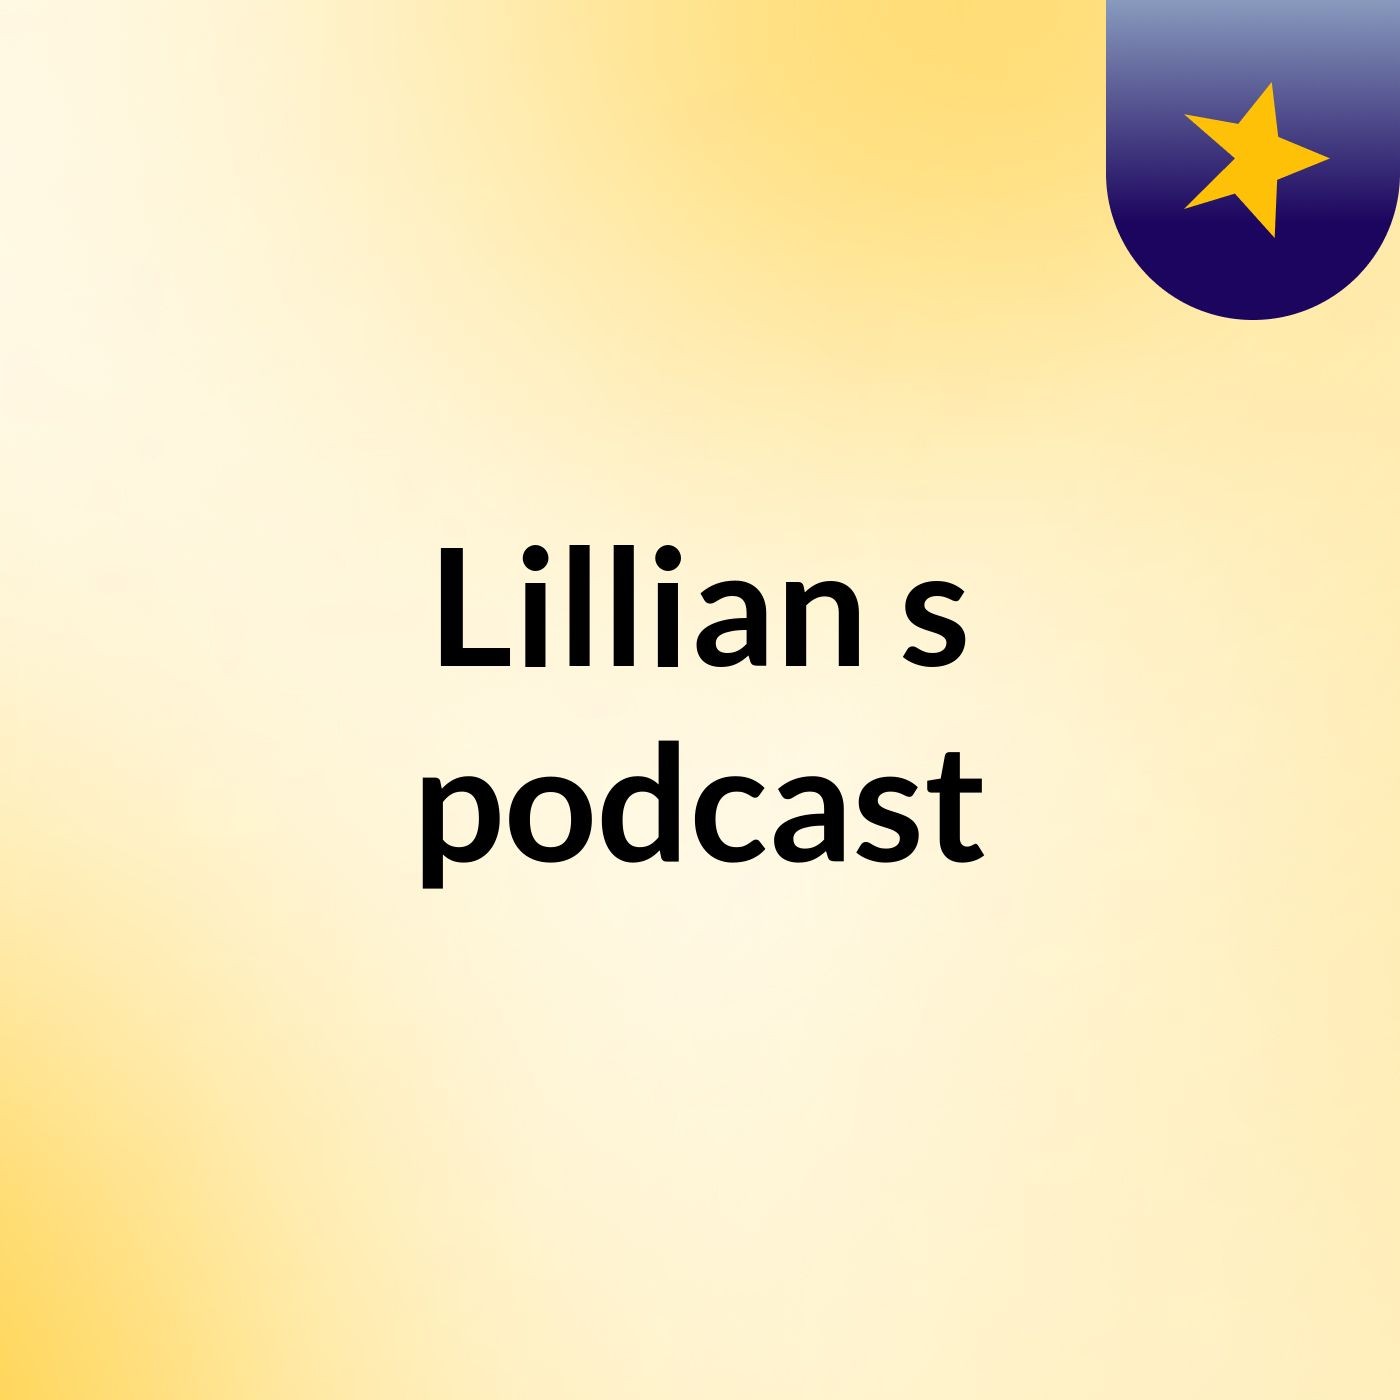 Lillian's podcast